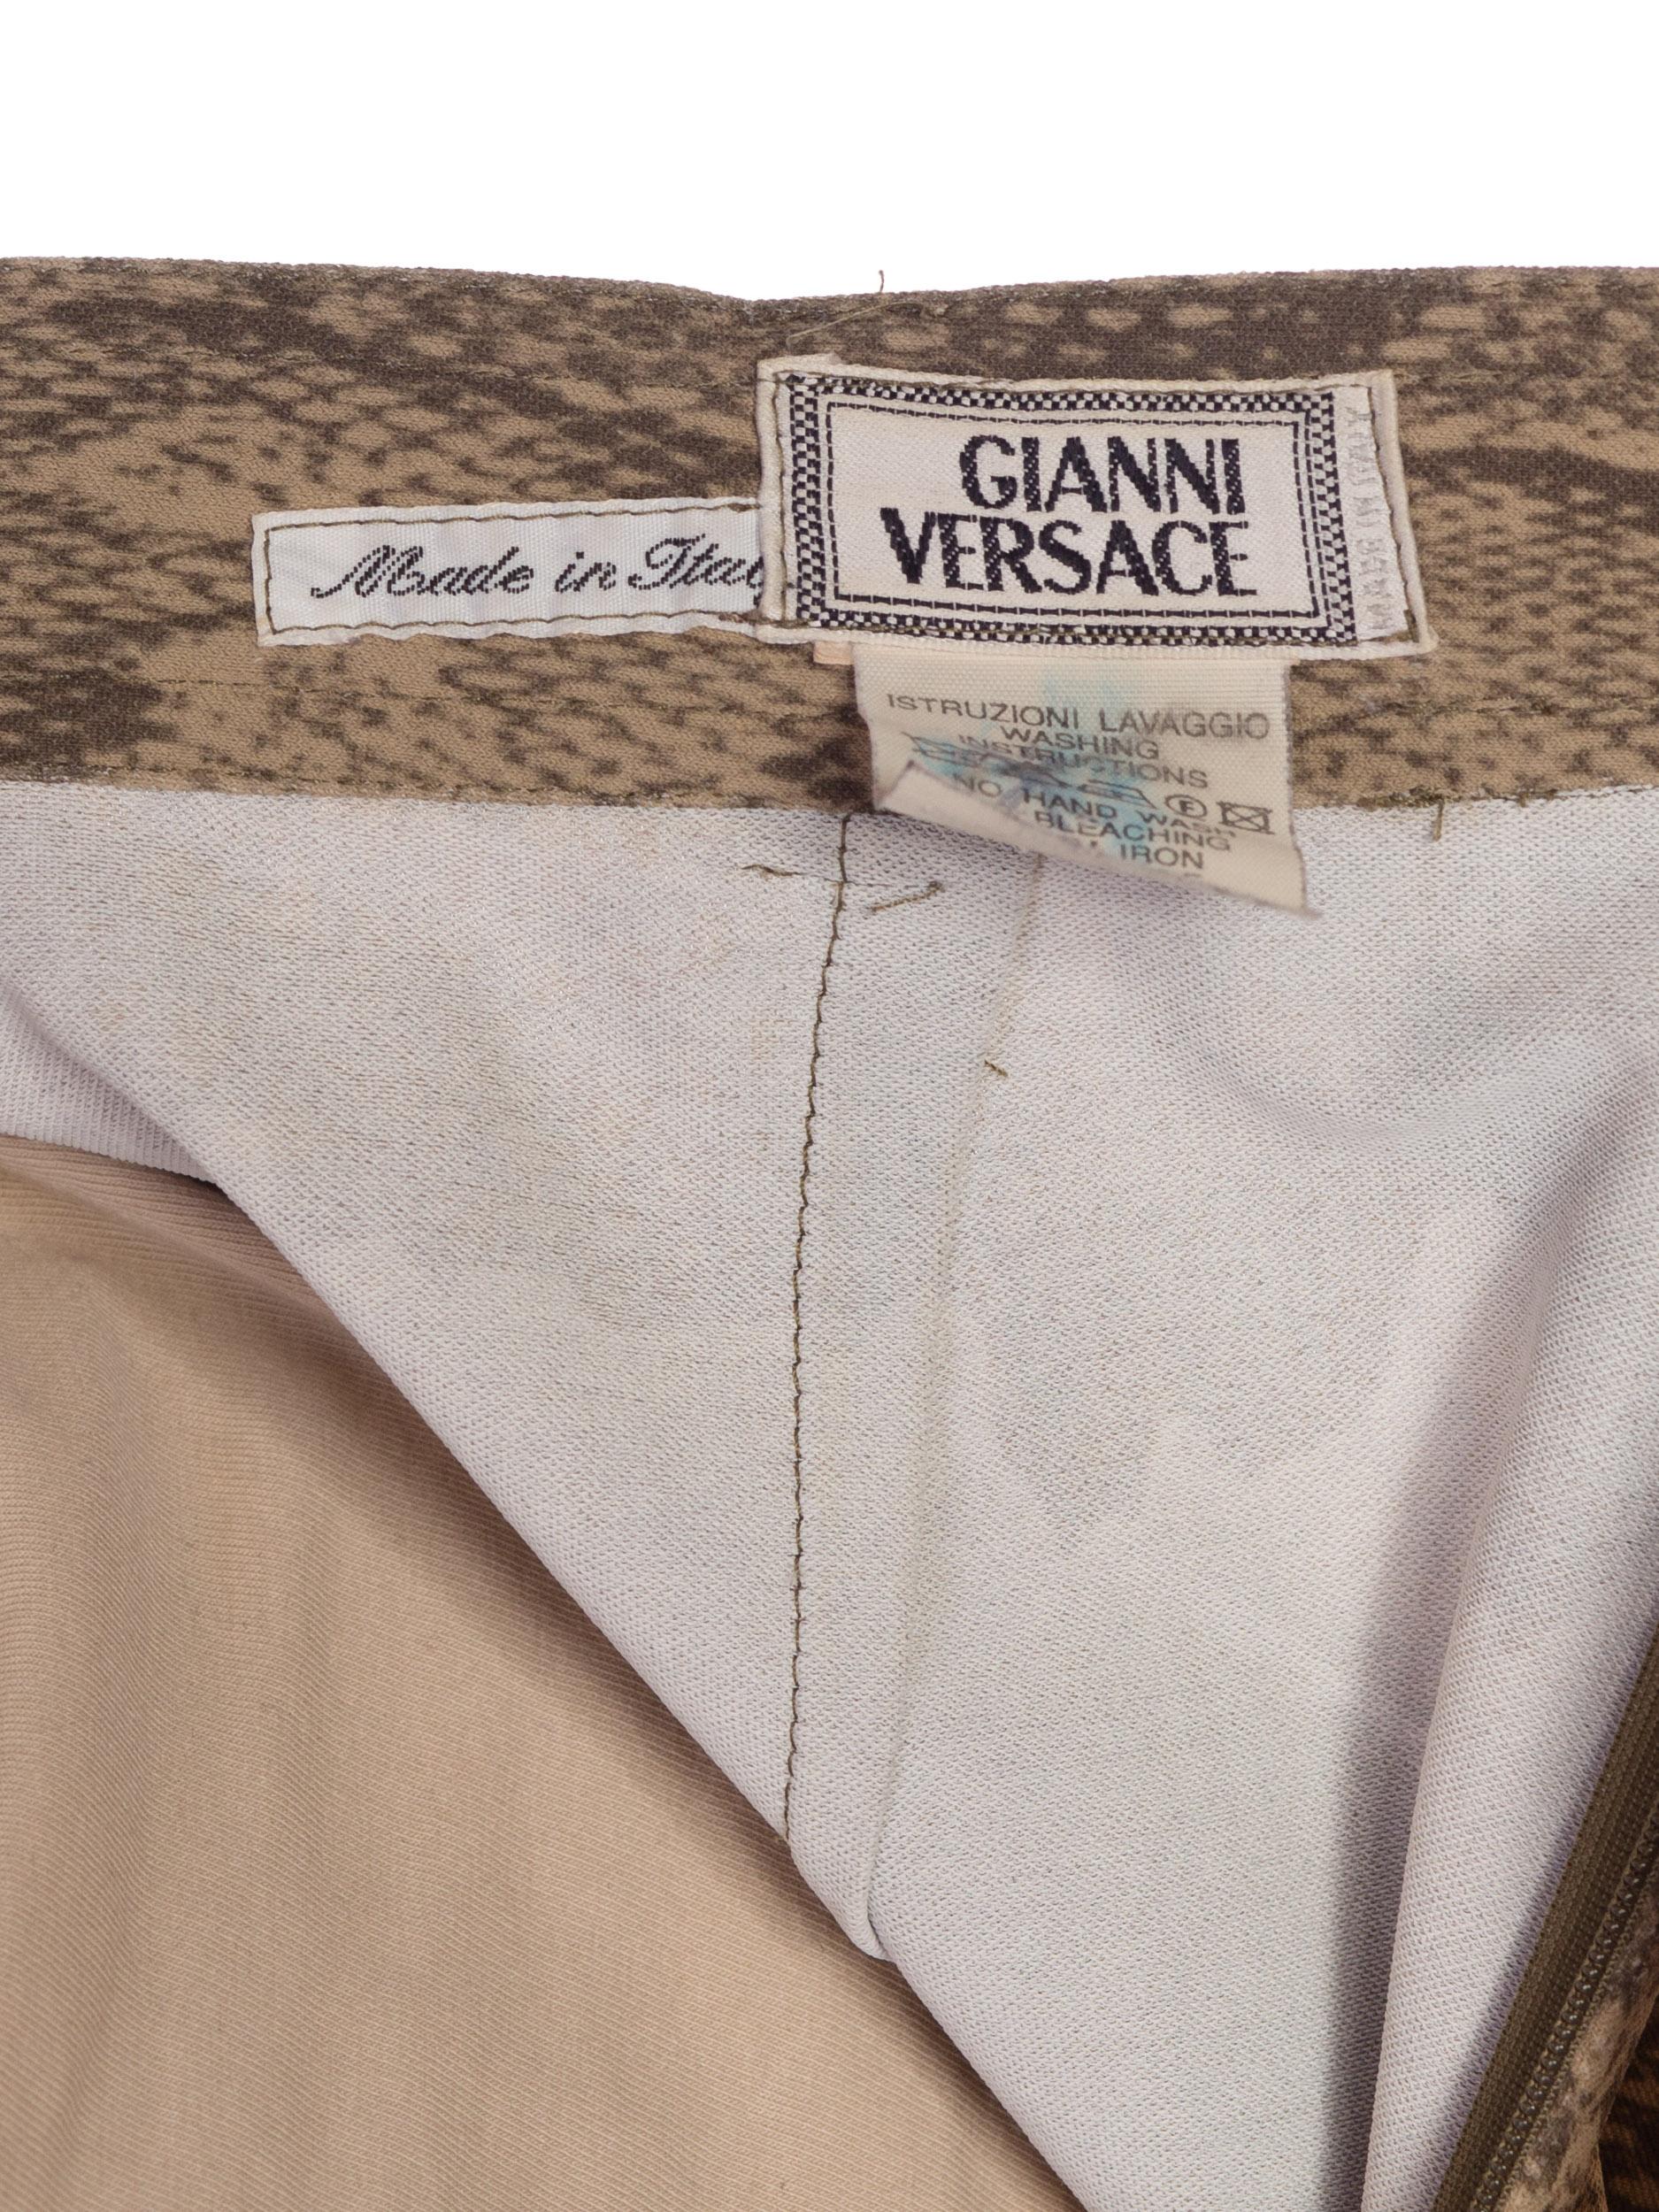 1990s Gianni Versace Stretchy Snake Printed Mini Skirt 2